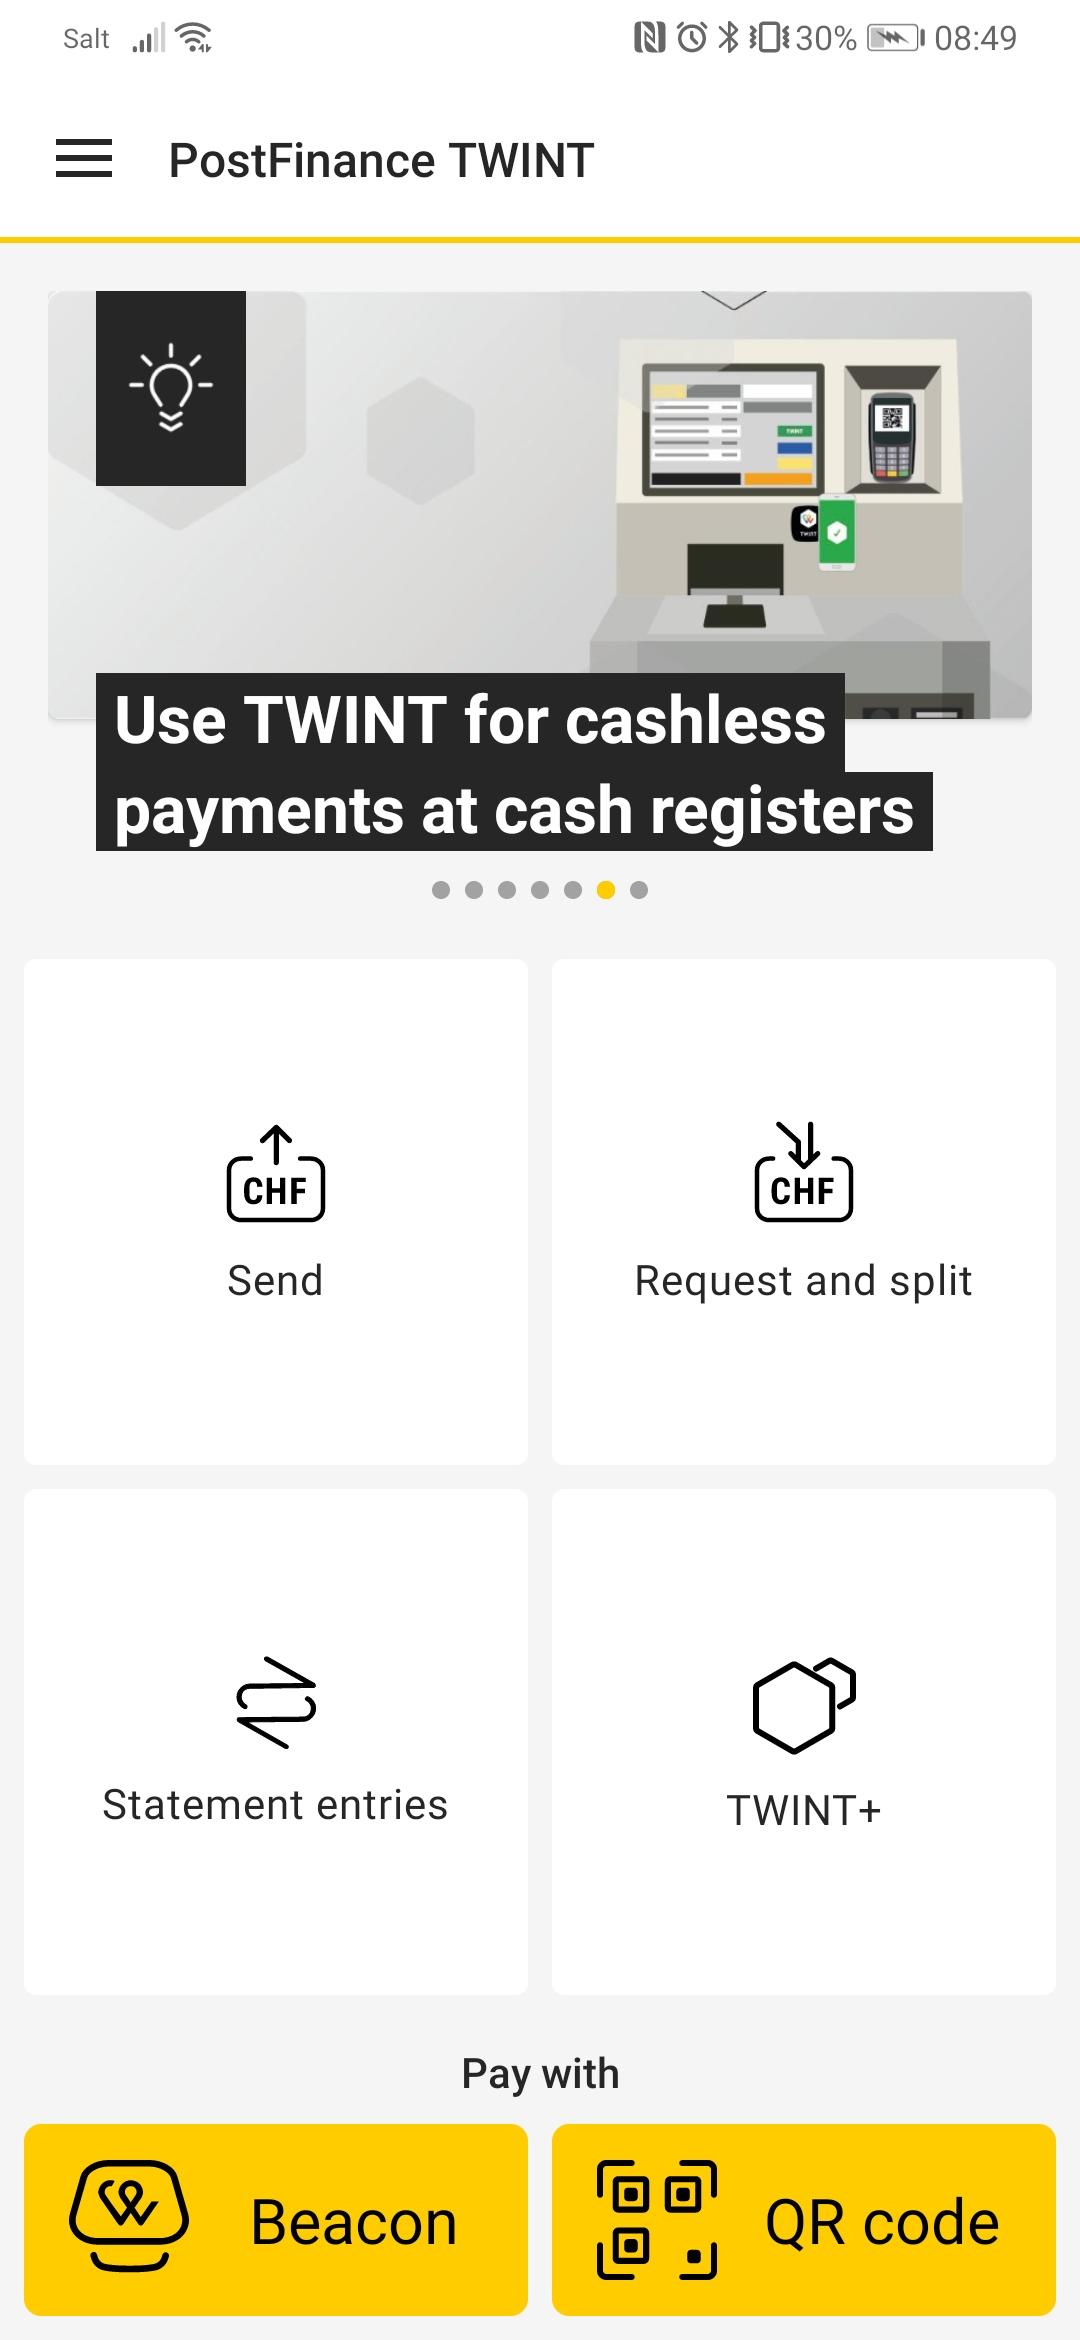 PostFinance TWINT 2.6.33.0 Screenshot 1